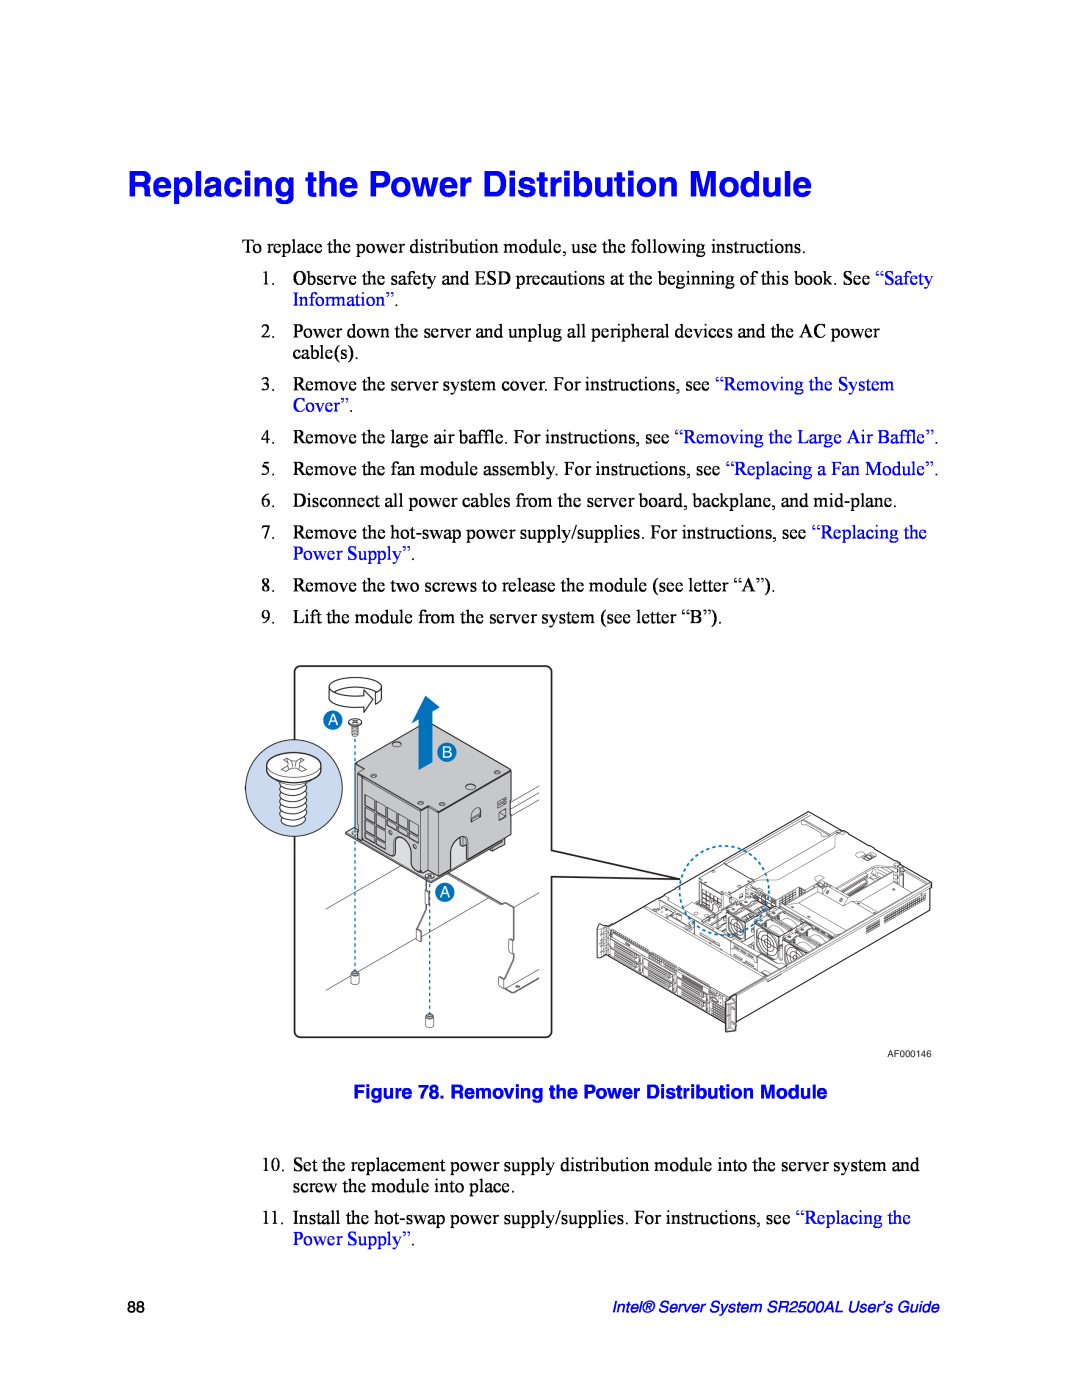 Intel SR2500AL manual Replacing the Power Distribution Module, Removing the Power Distribution Module 